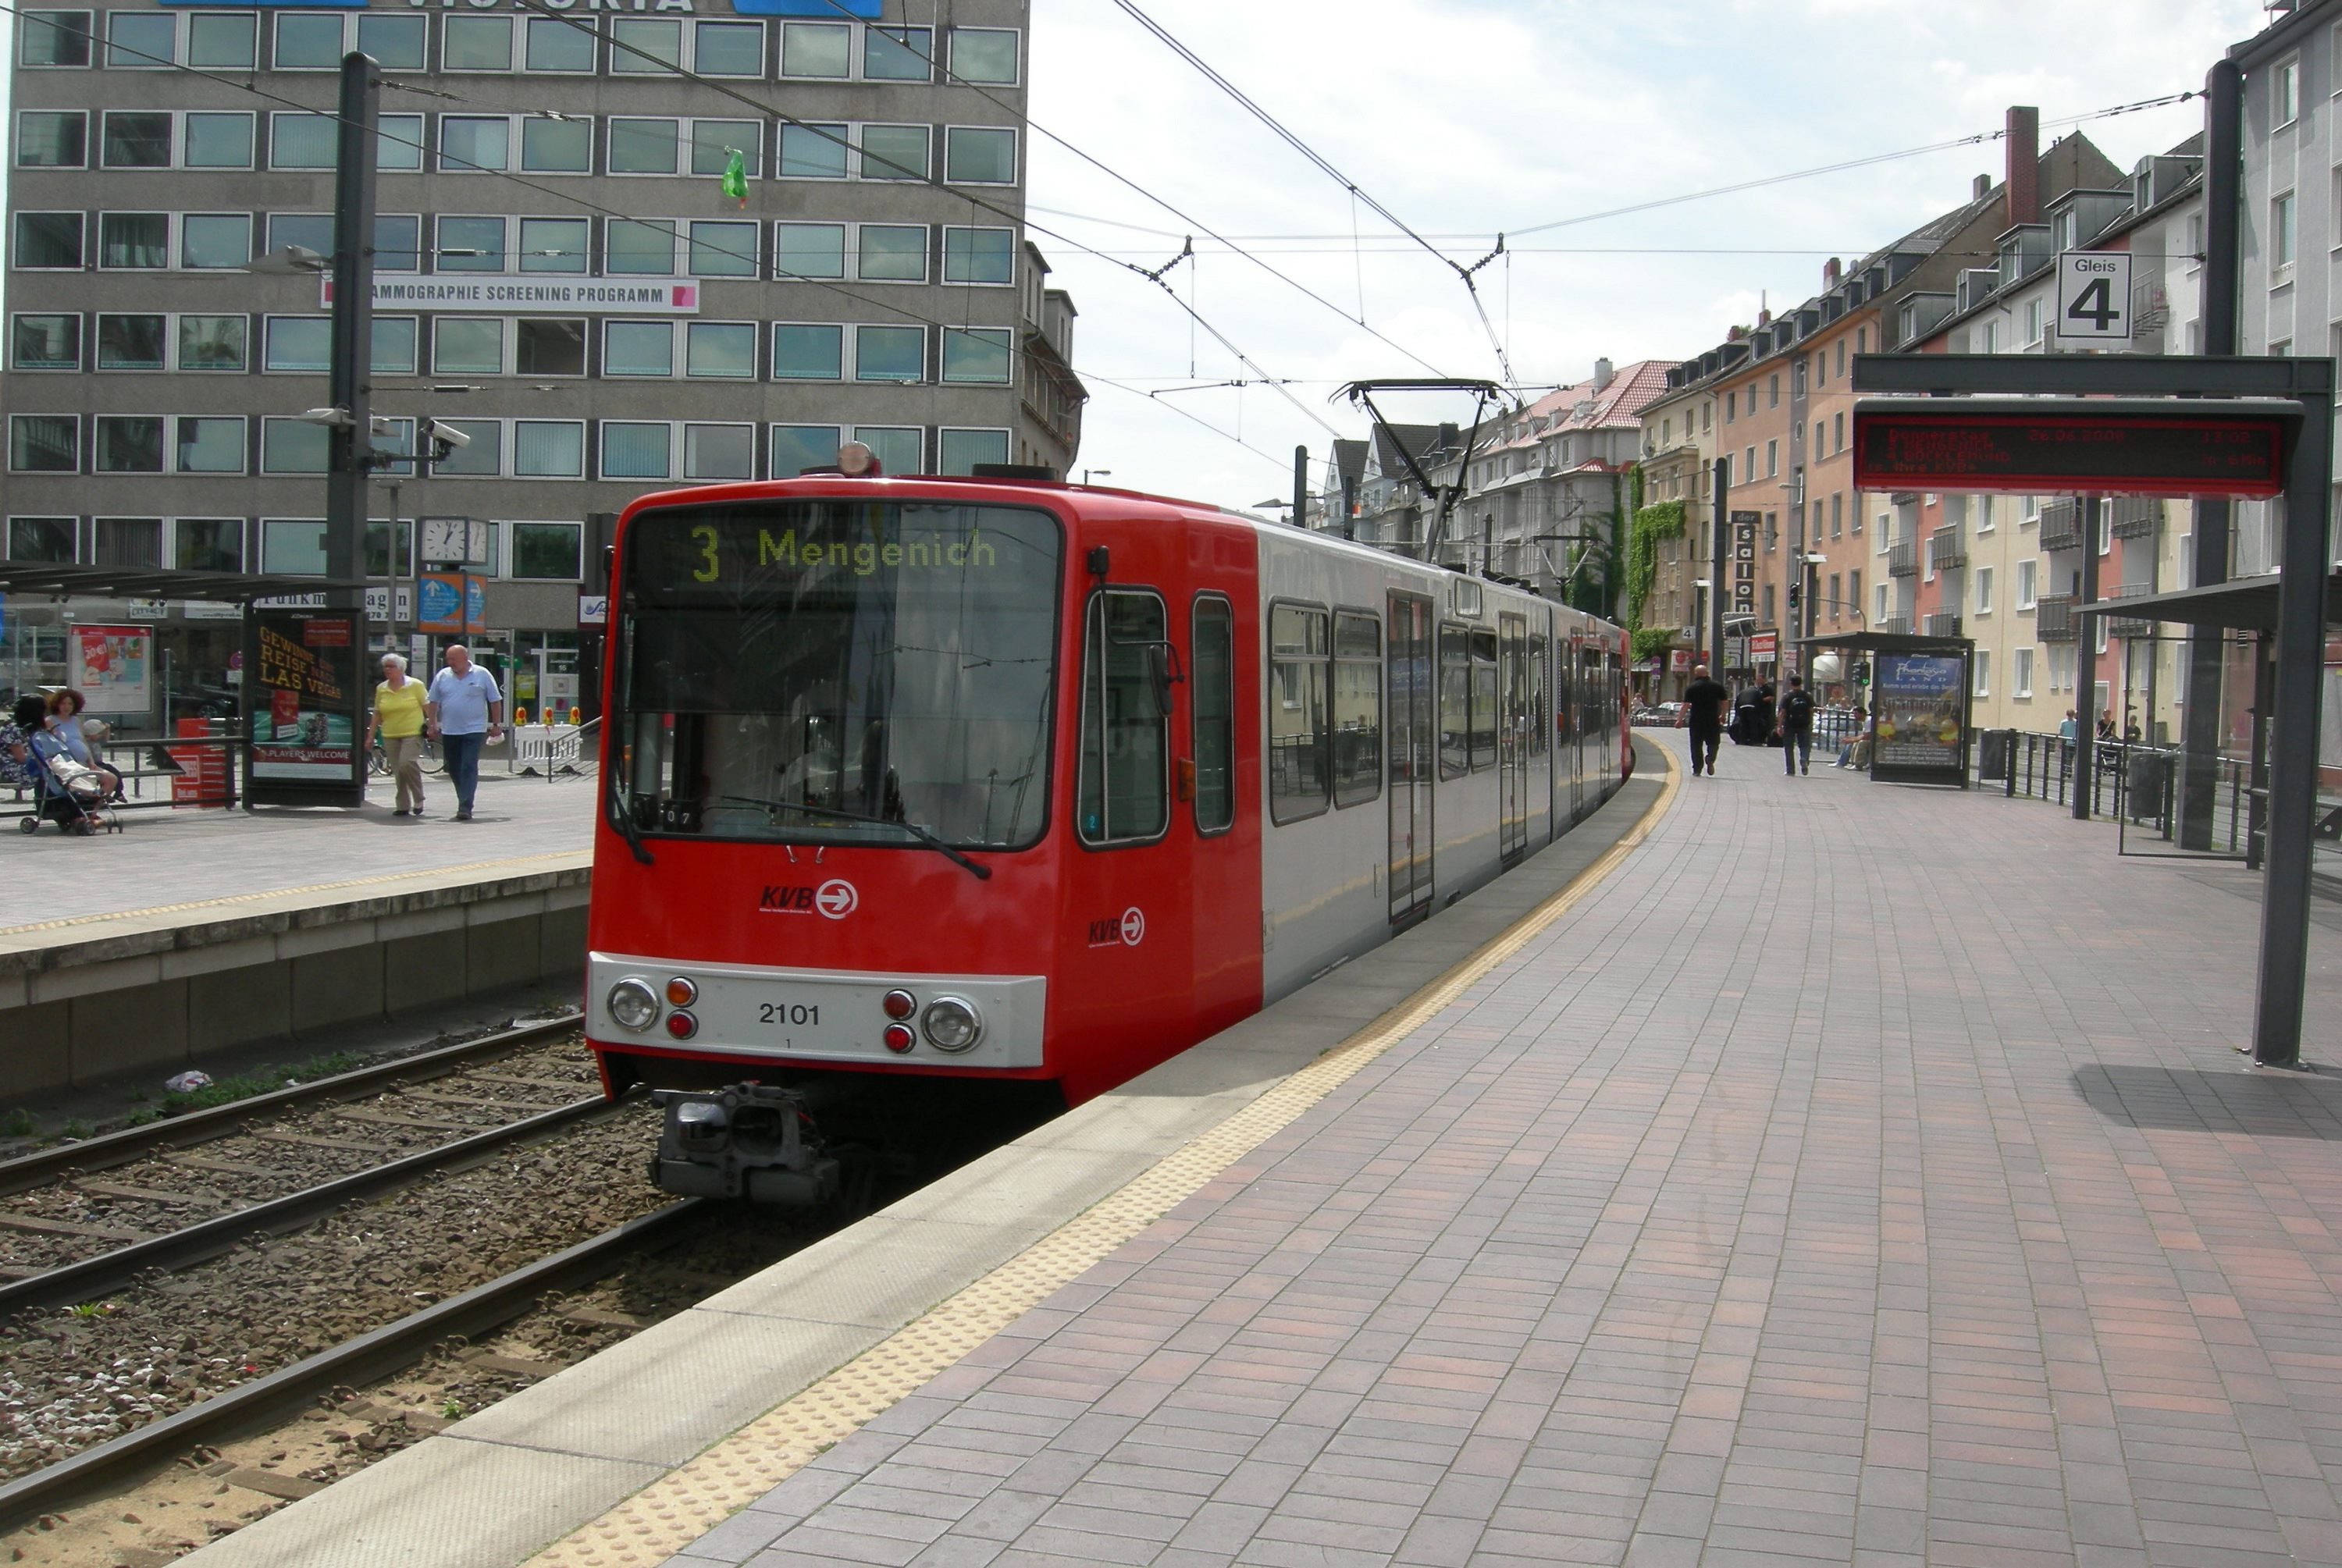 3 K-Ollenhauerring K-Bahnhof Deutz/Kölnarena